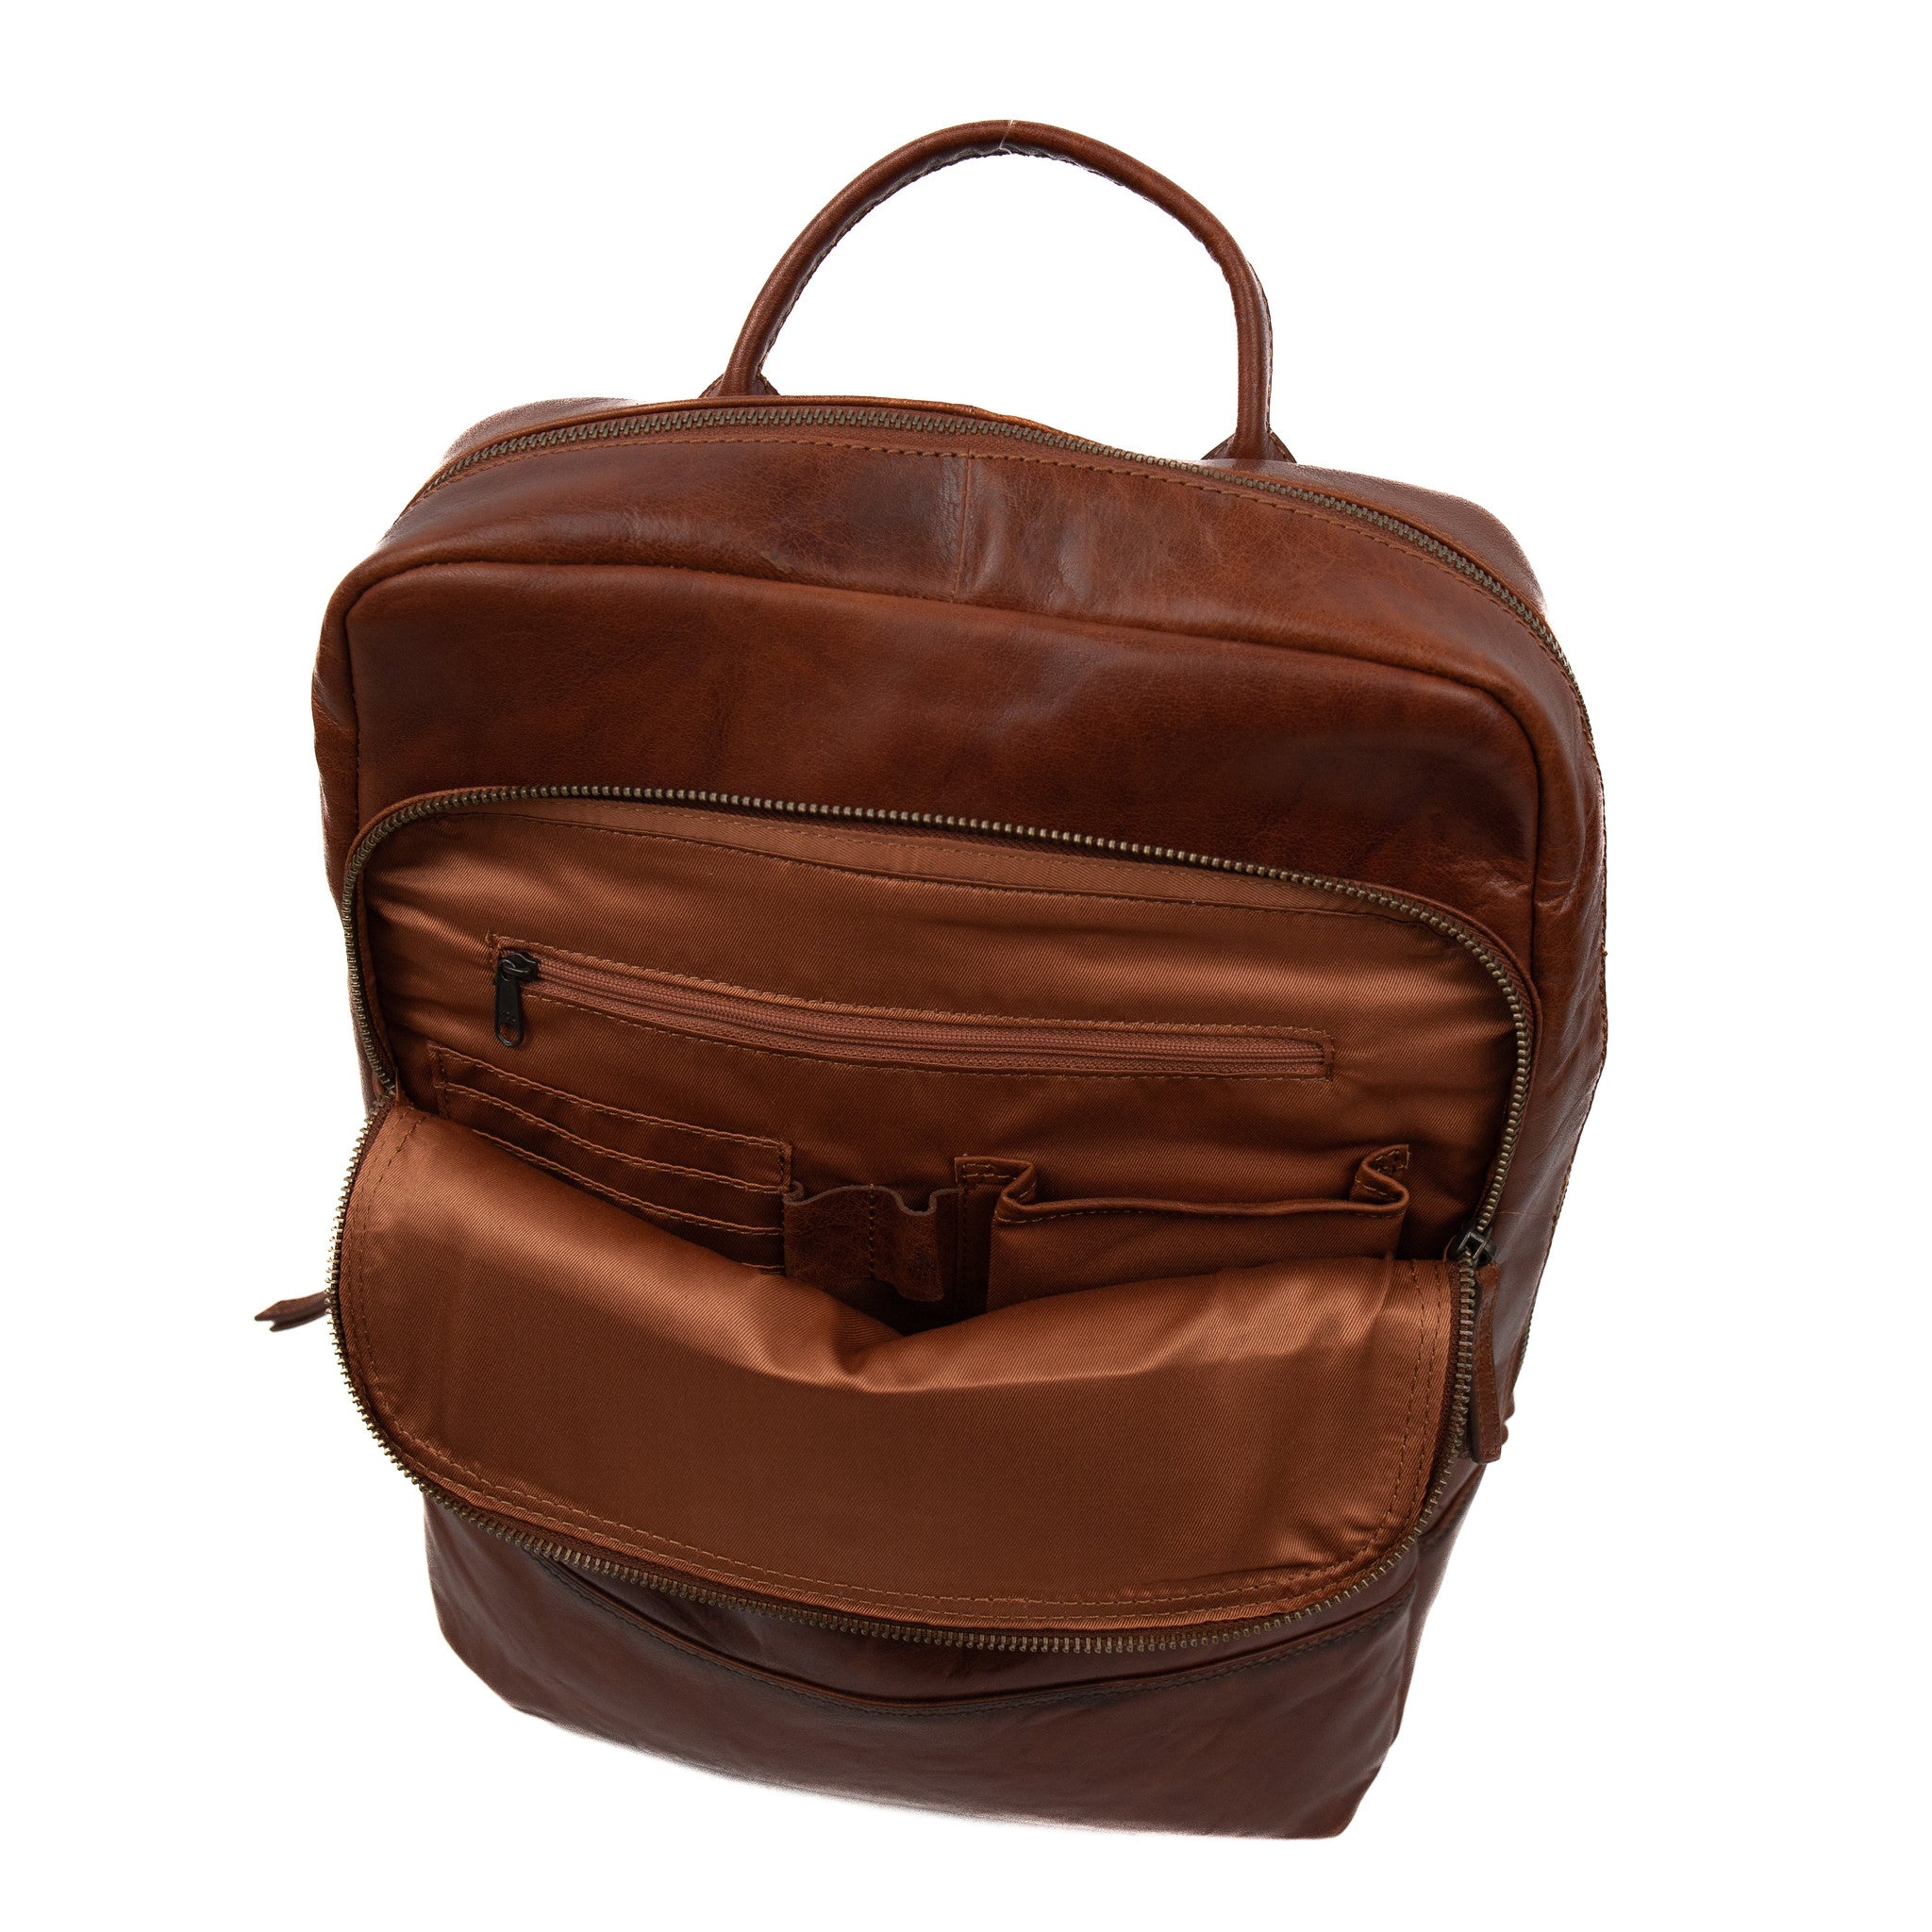 Backpack 'Mason' cognac - AD 40052